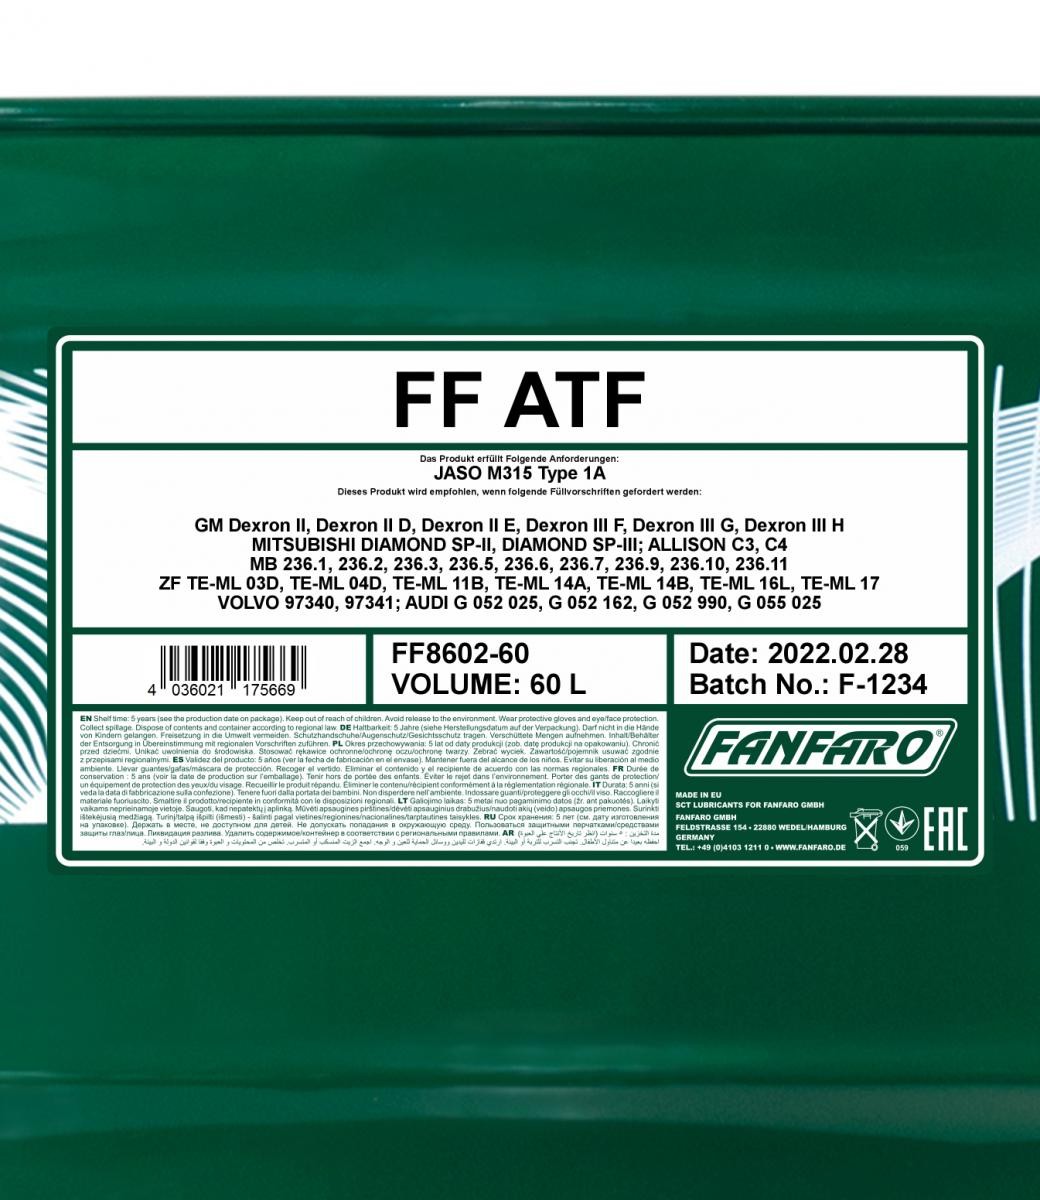 FANFARO Automatikgetriebeöl FF8602-60